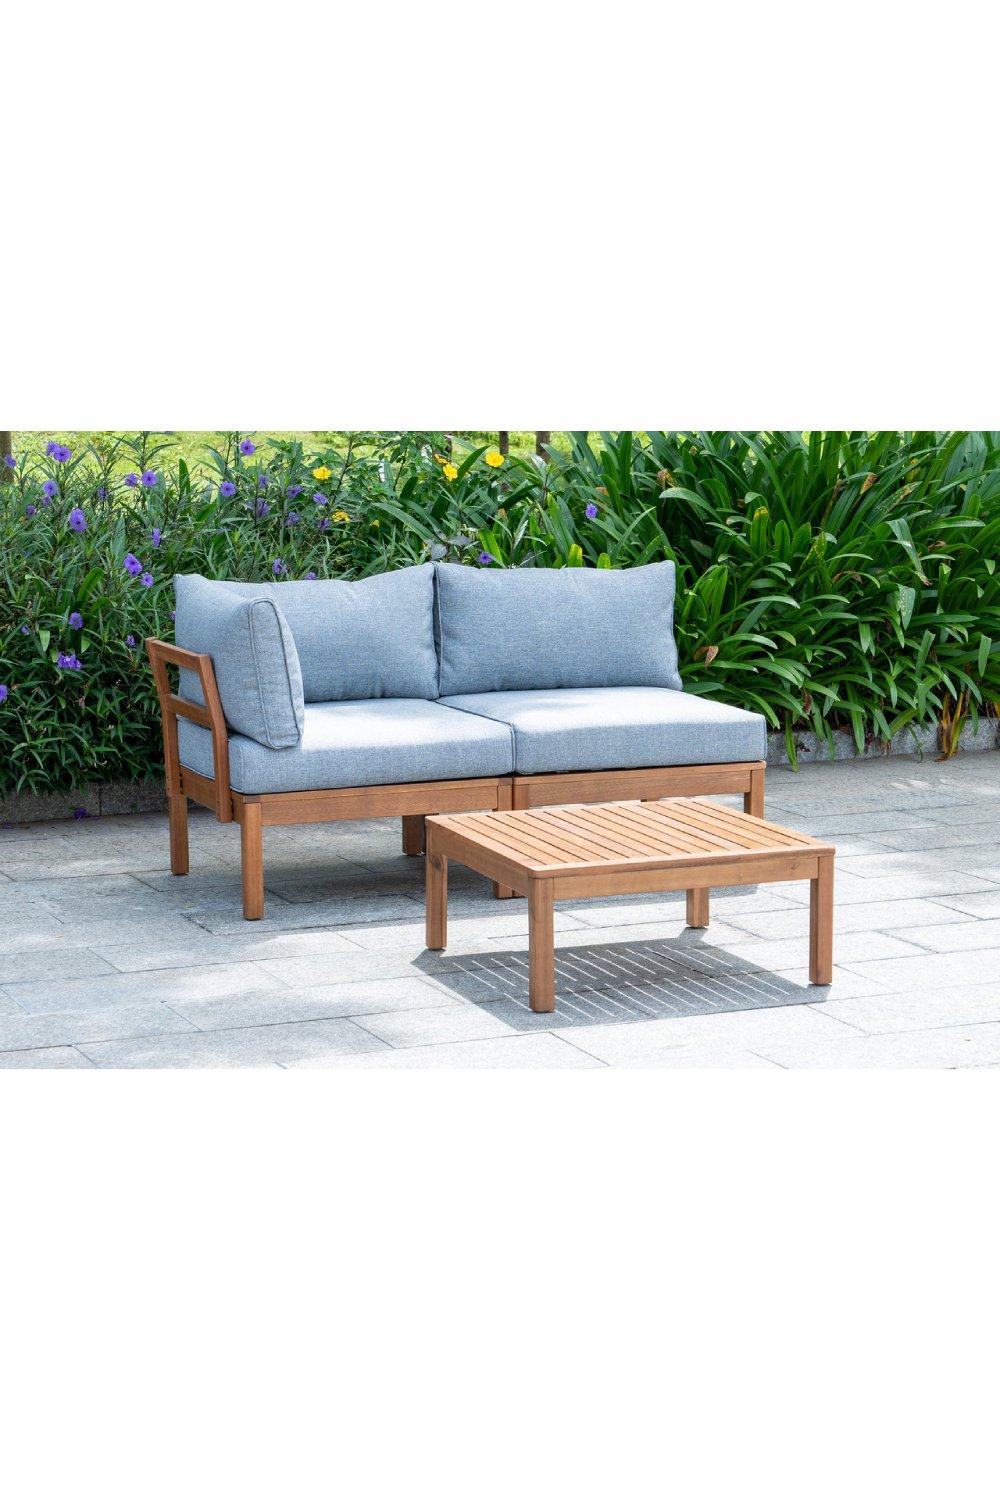 Cali - Wooden Garden Lounge Set - 2 Seats